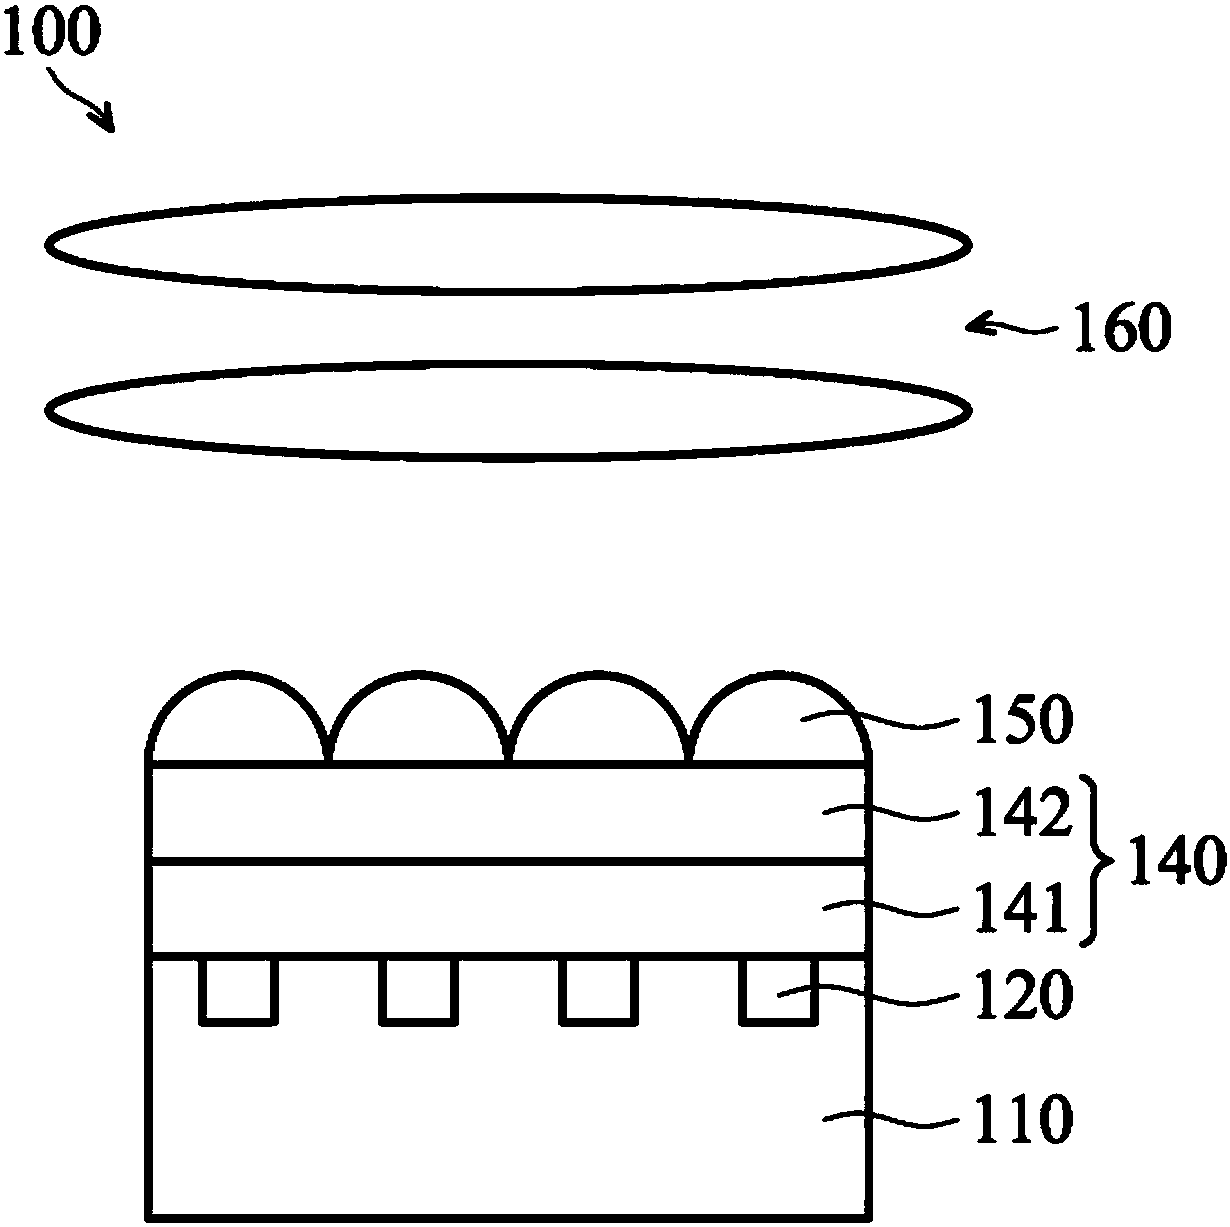 Light filter structure and image sensor